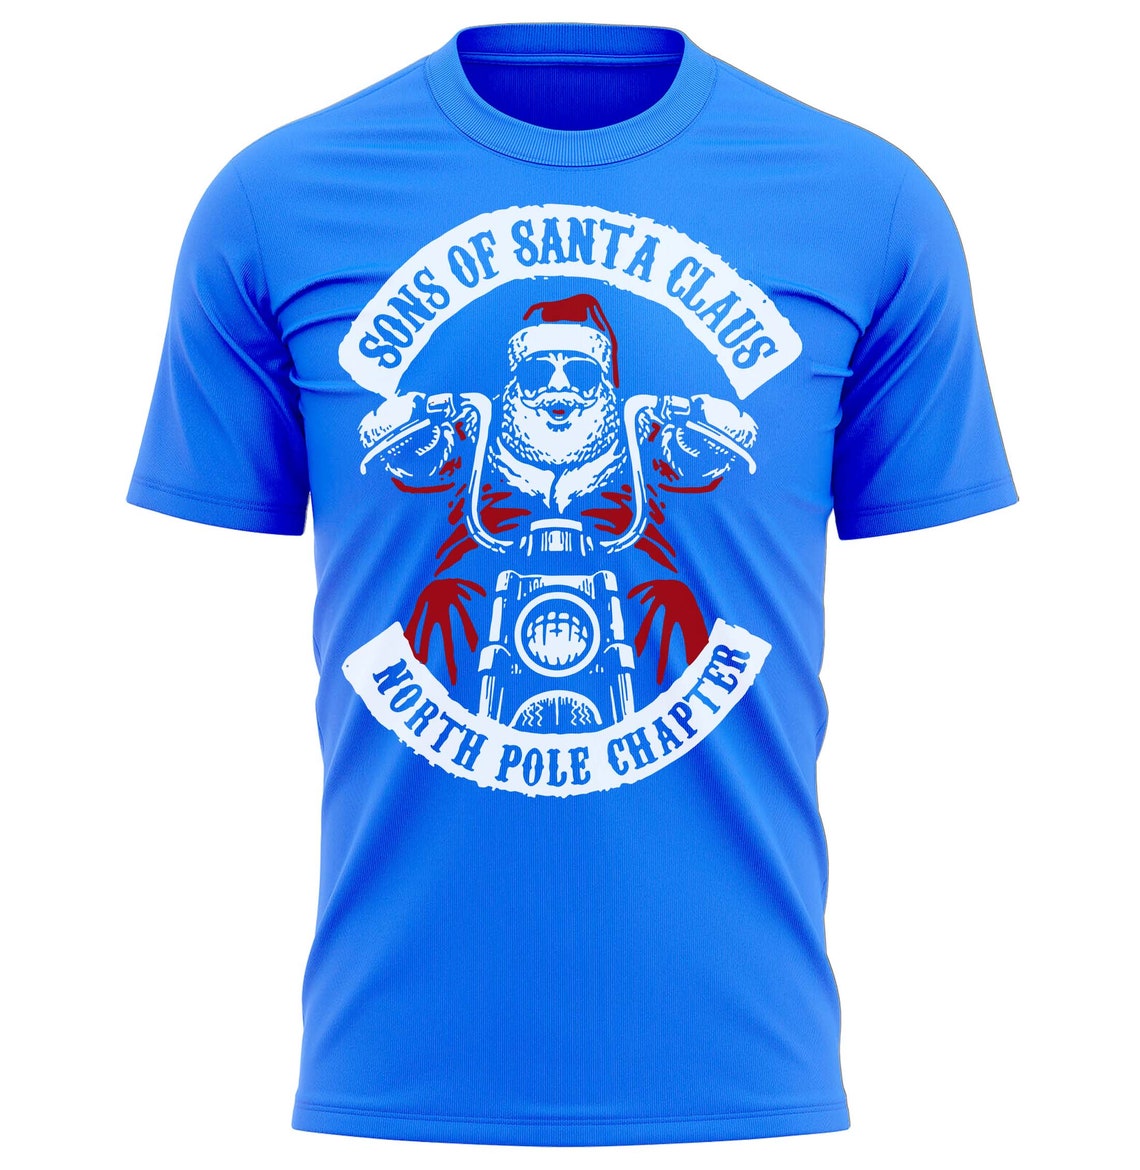 The North Pole Chapter Biker Christmas T-Shirt Santa Xmas Tee Shirt Gift Present